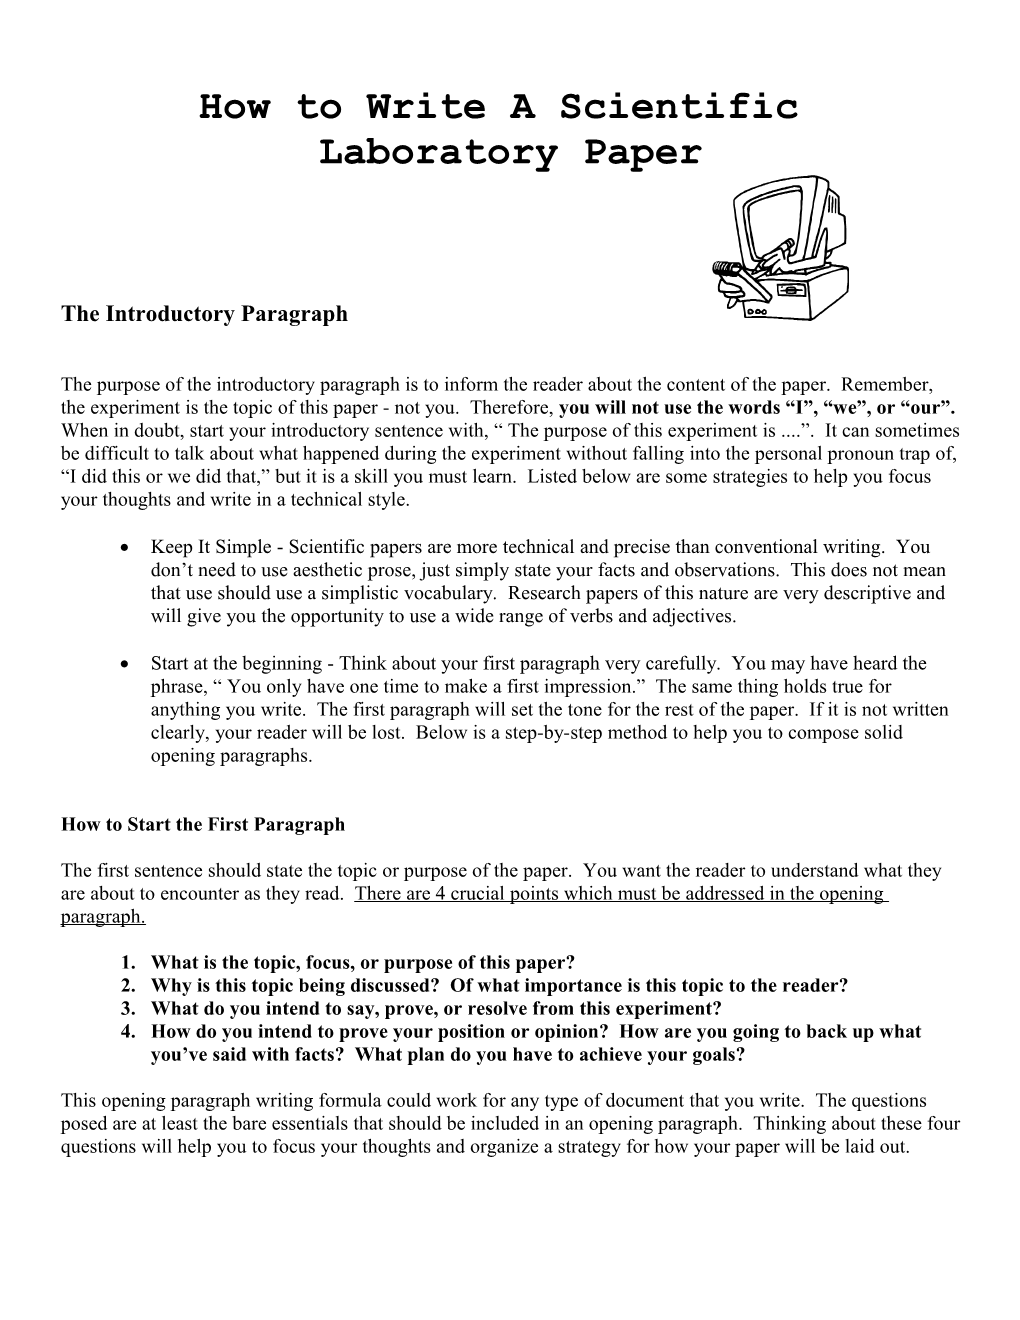 How to Write a Scientific Laboratory Paper